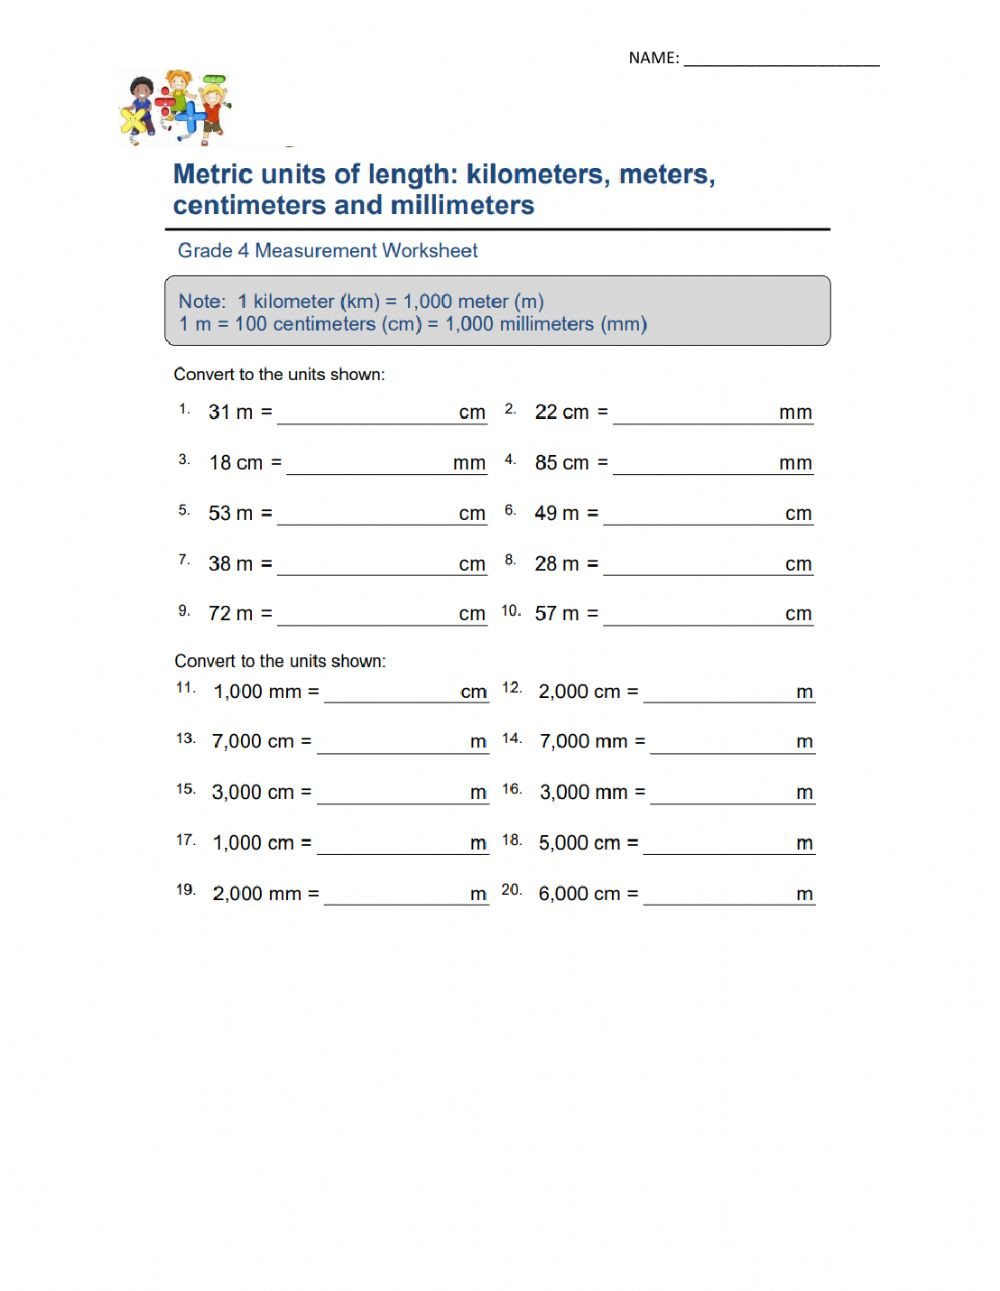 English to Metric Conversion Worksheet Metric Units Of Length Interactive Worksheet